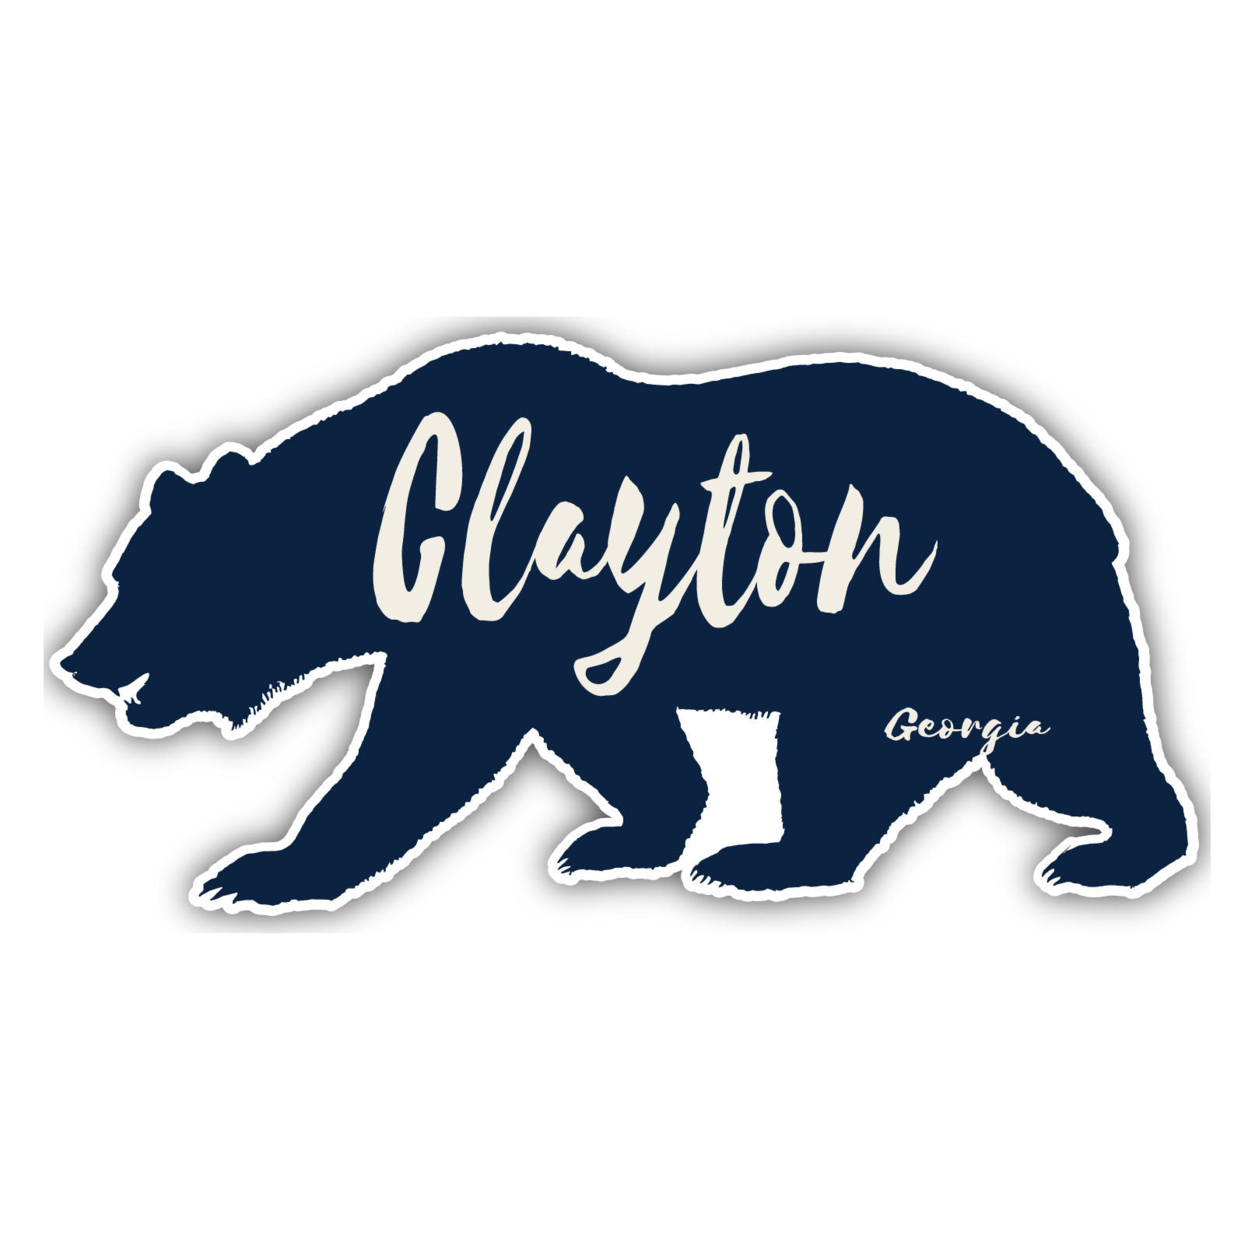 Clayton Georgia Souvenir Decorative Stickers (Choose Theme And Size) - 4-Pack, 4-Inch, Bear